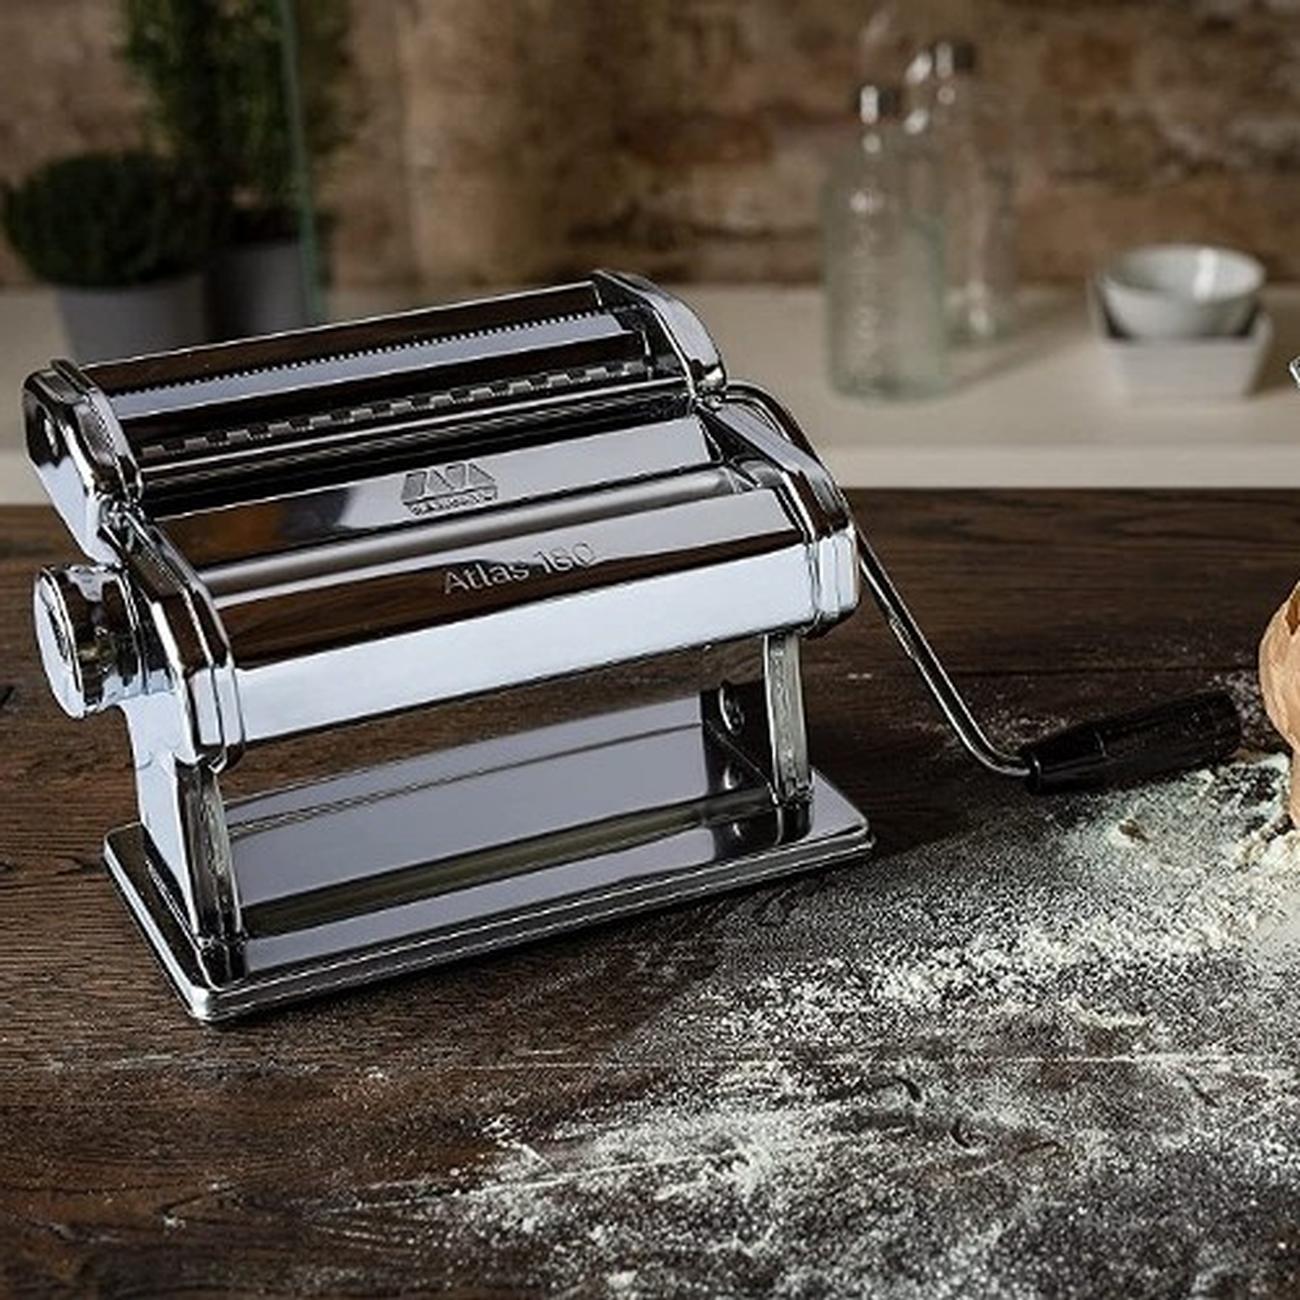 Marcato Atlas 150 Pasta Machine, Design chrome